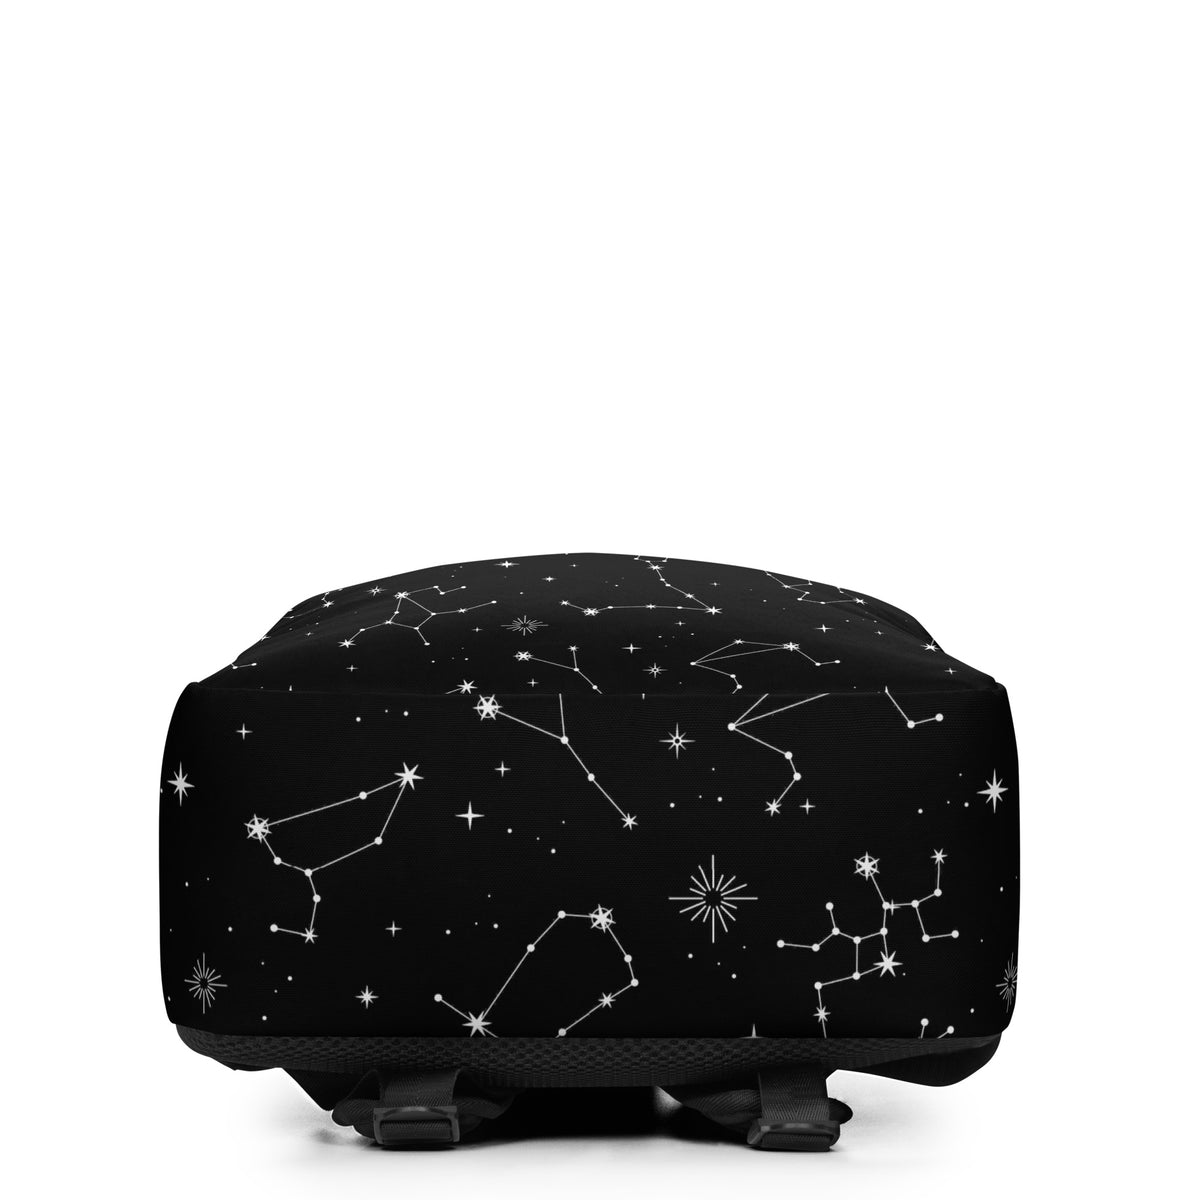 WytchWood Astrologist Minimalist Backpack